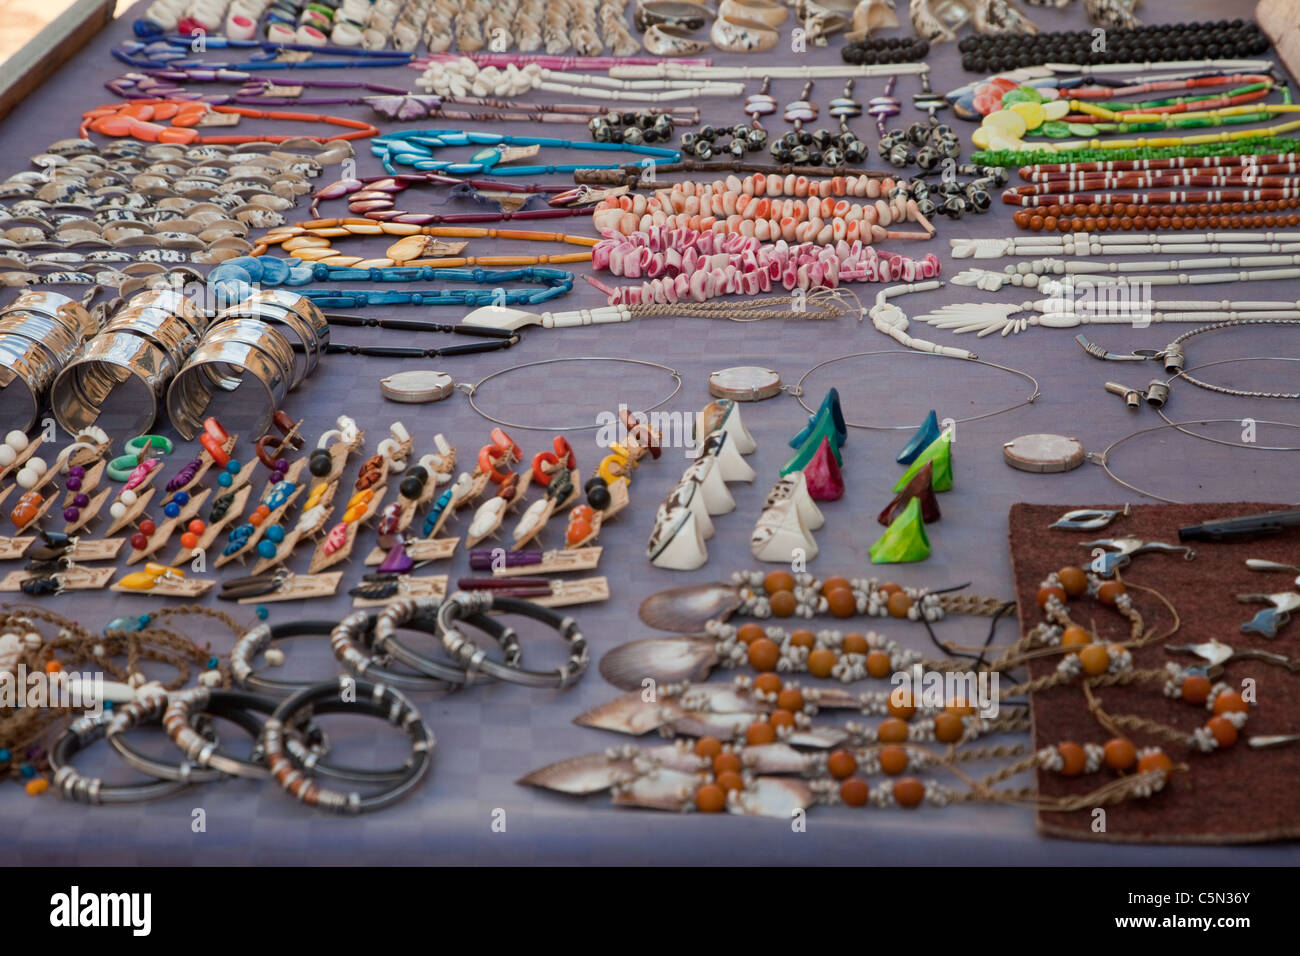 Cuba, Trinidad. Jewelry and Handicrafts, Souvenir Market for Tourists. Stock Photo